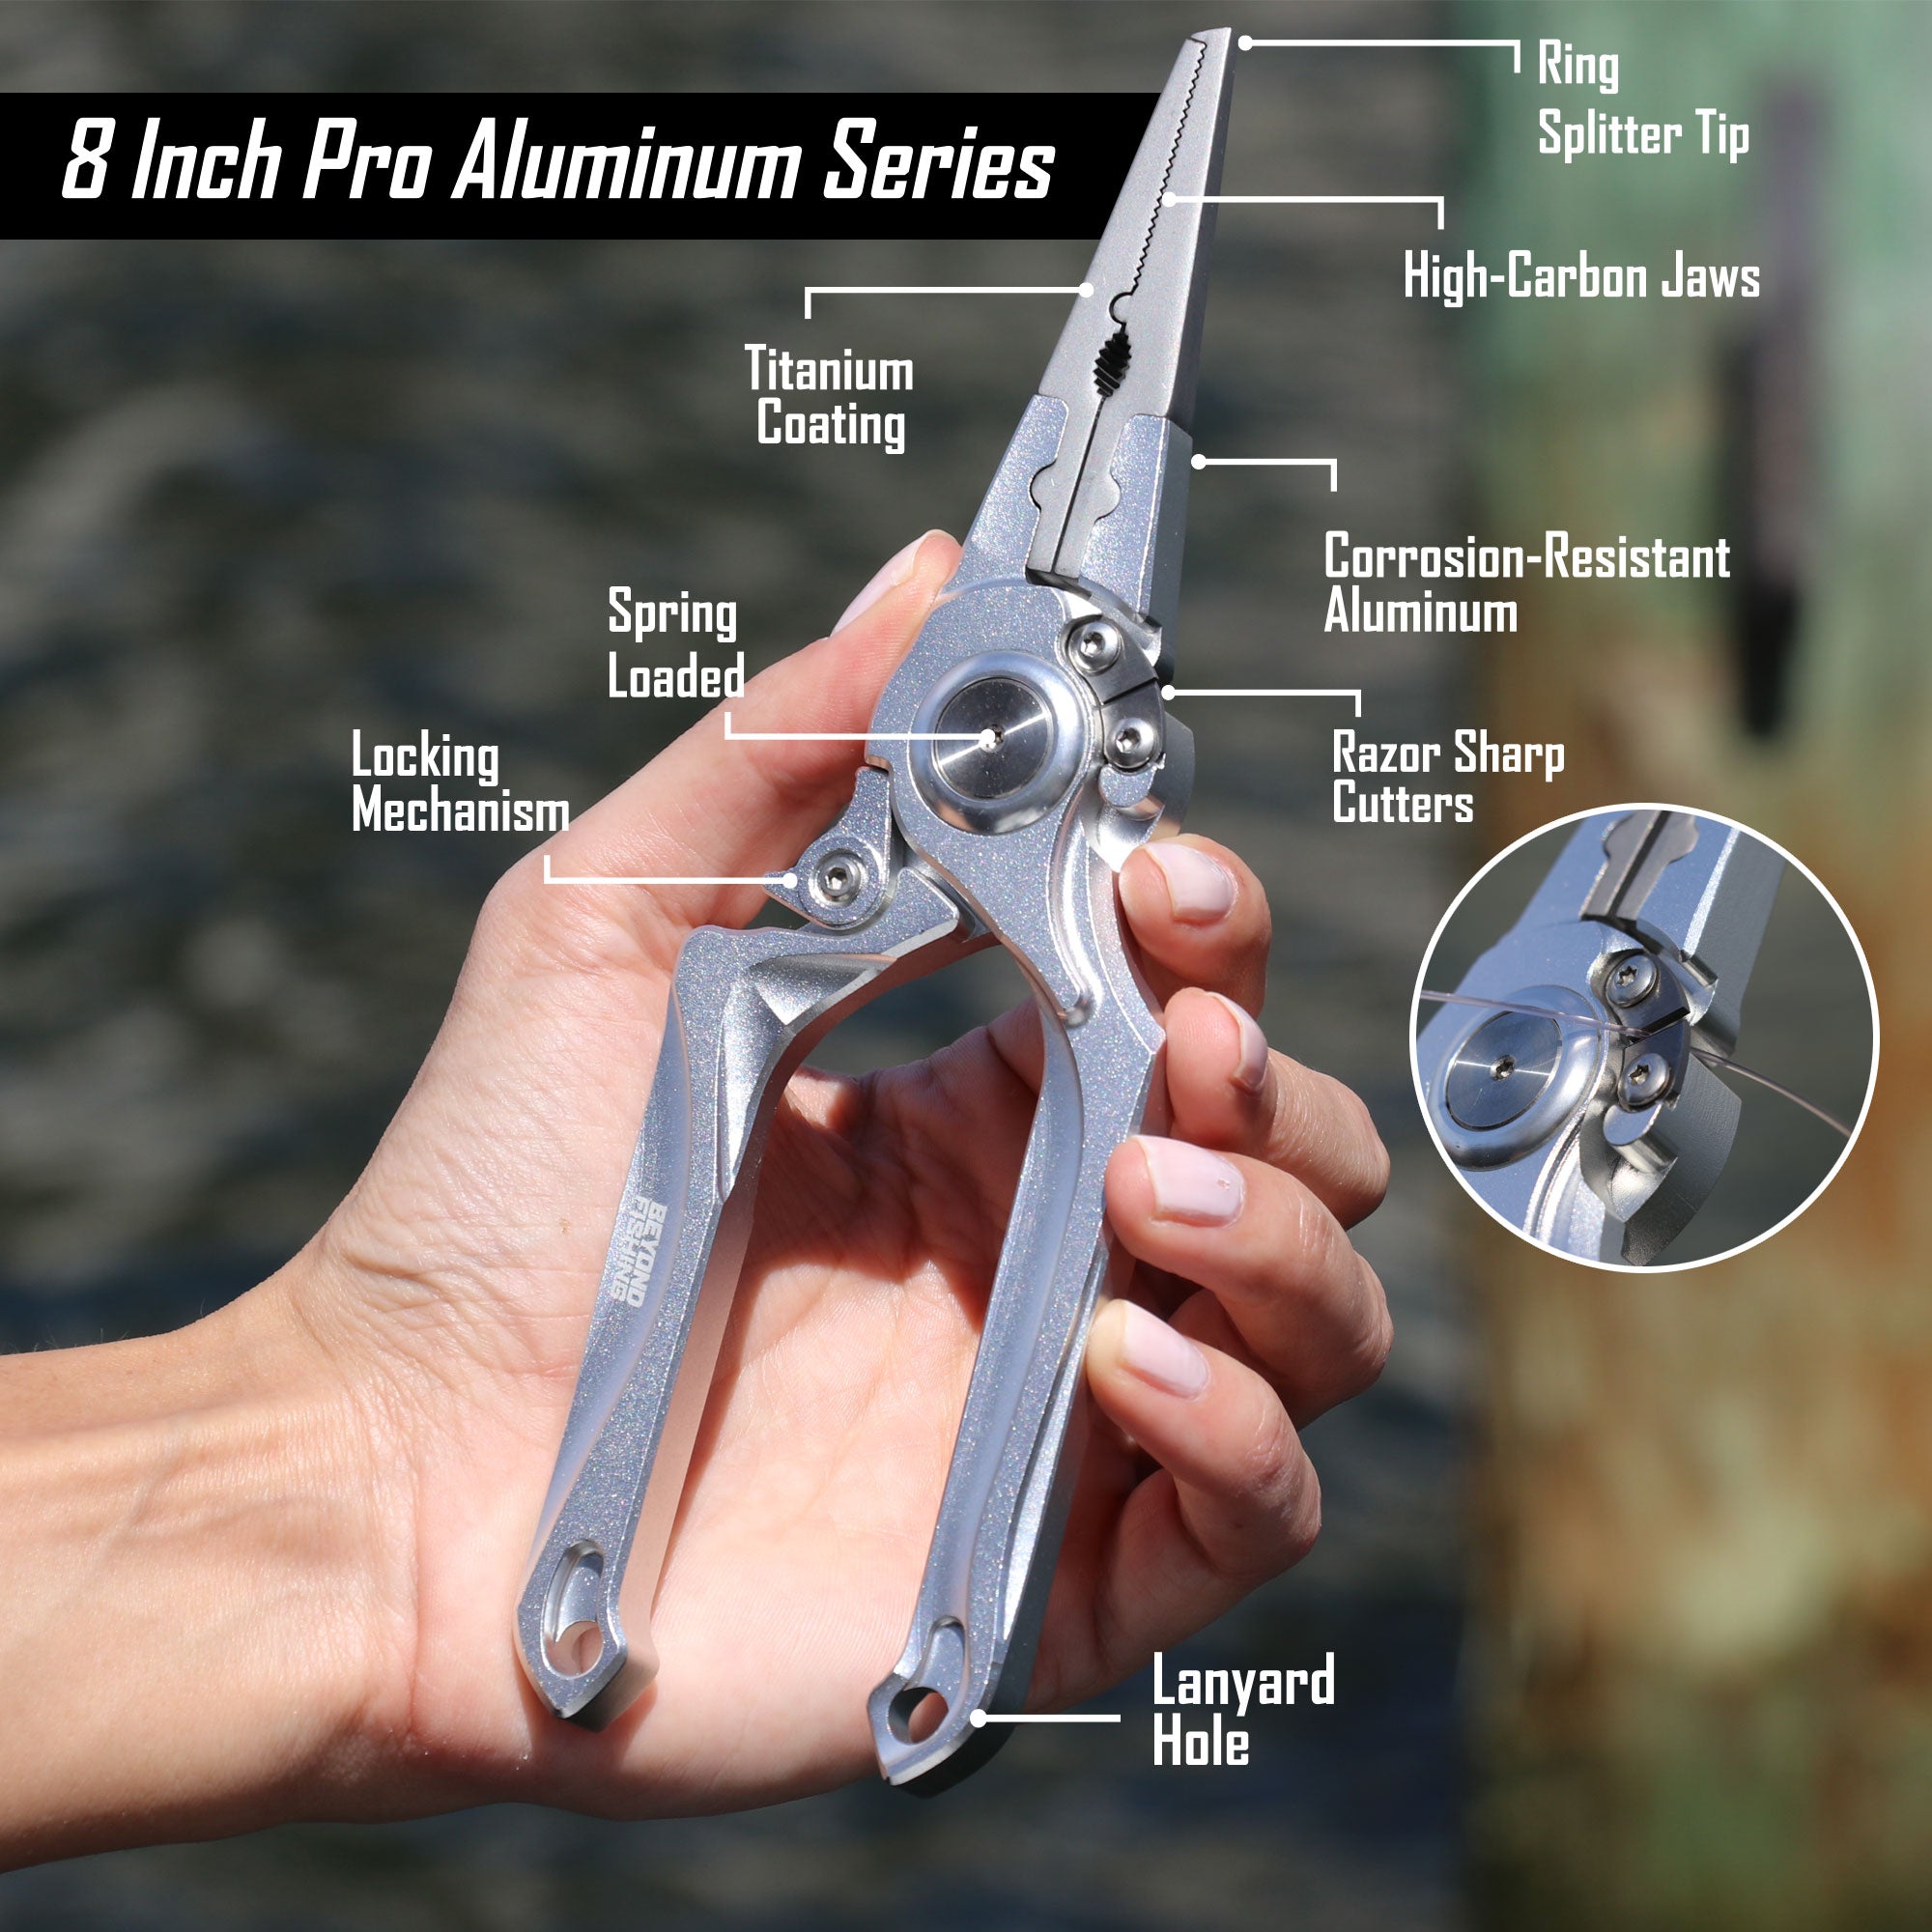 Pro Aluminum Series 8" Inch Pliers